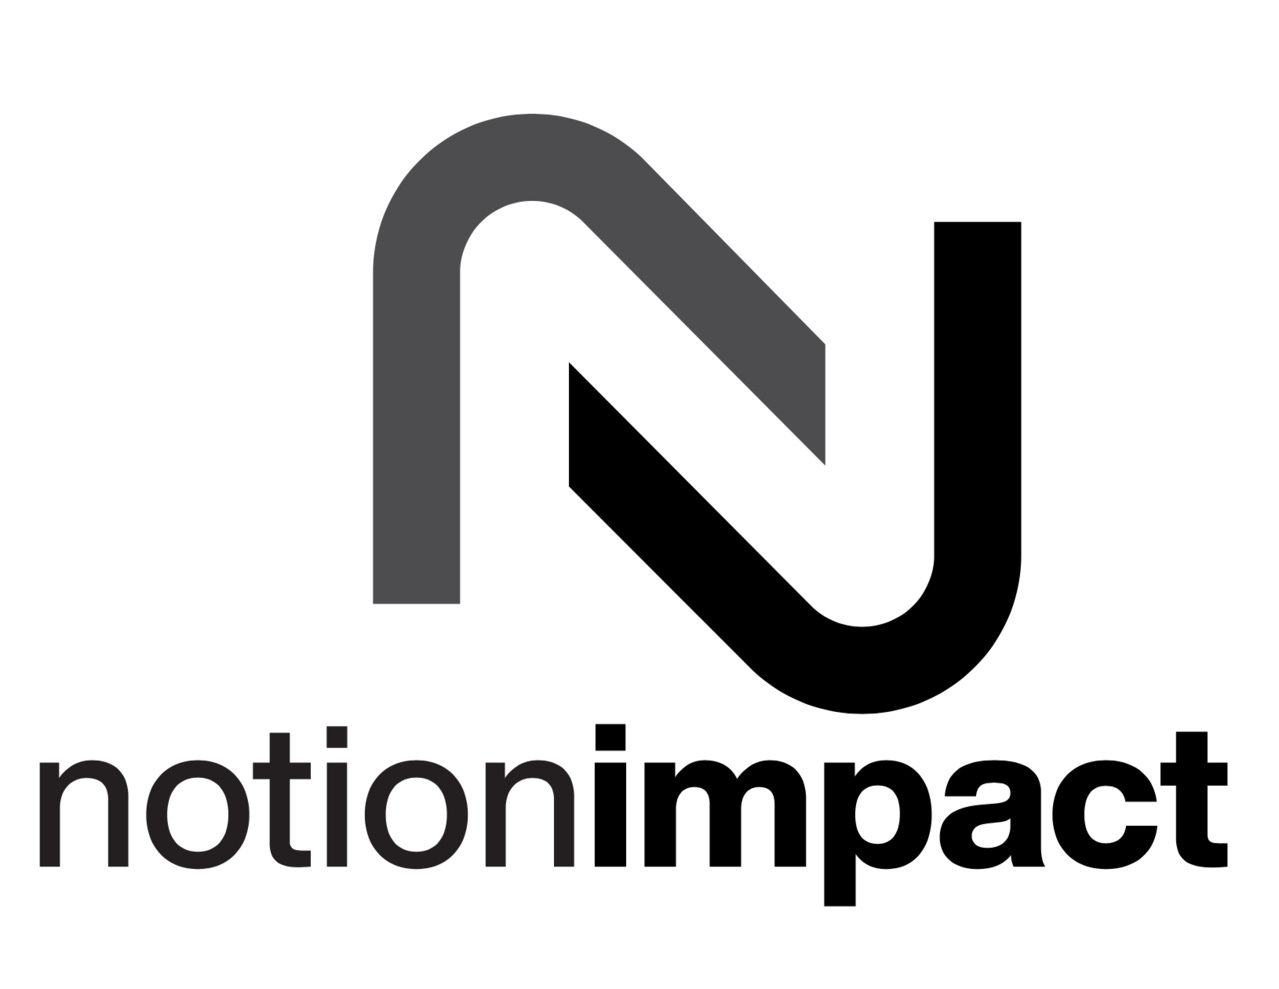 Notion Impact